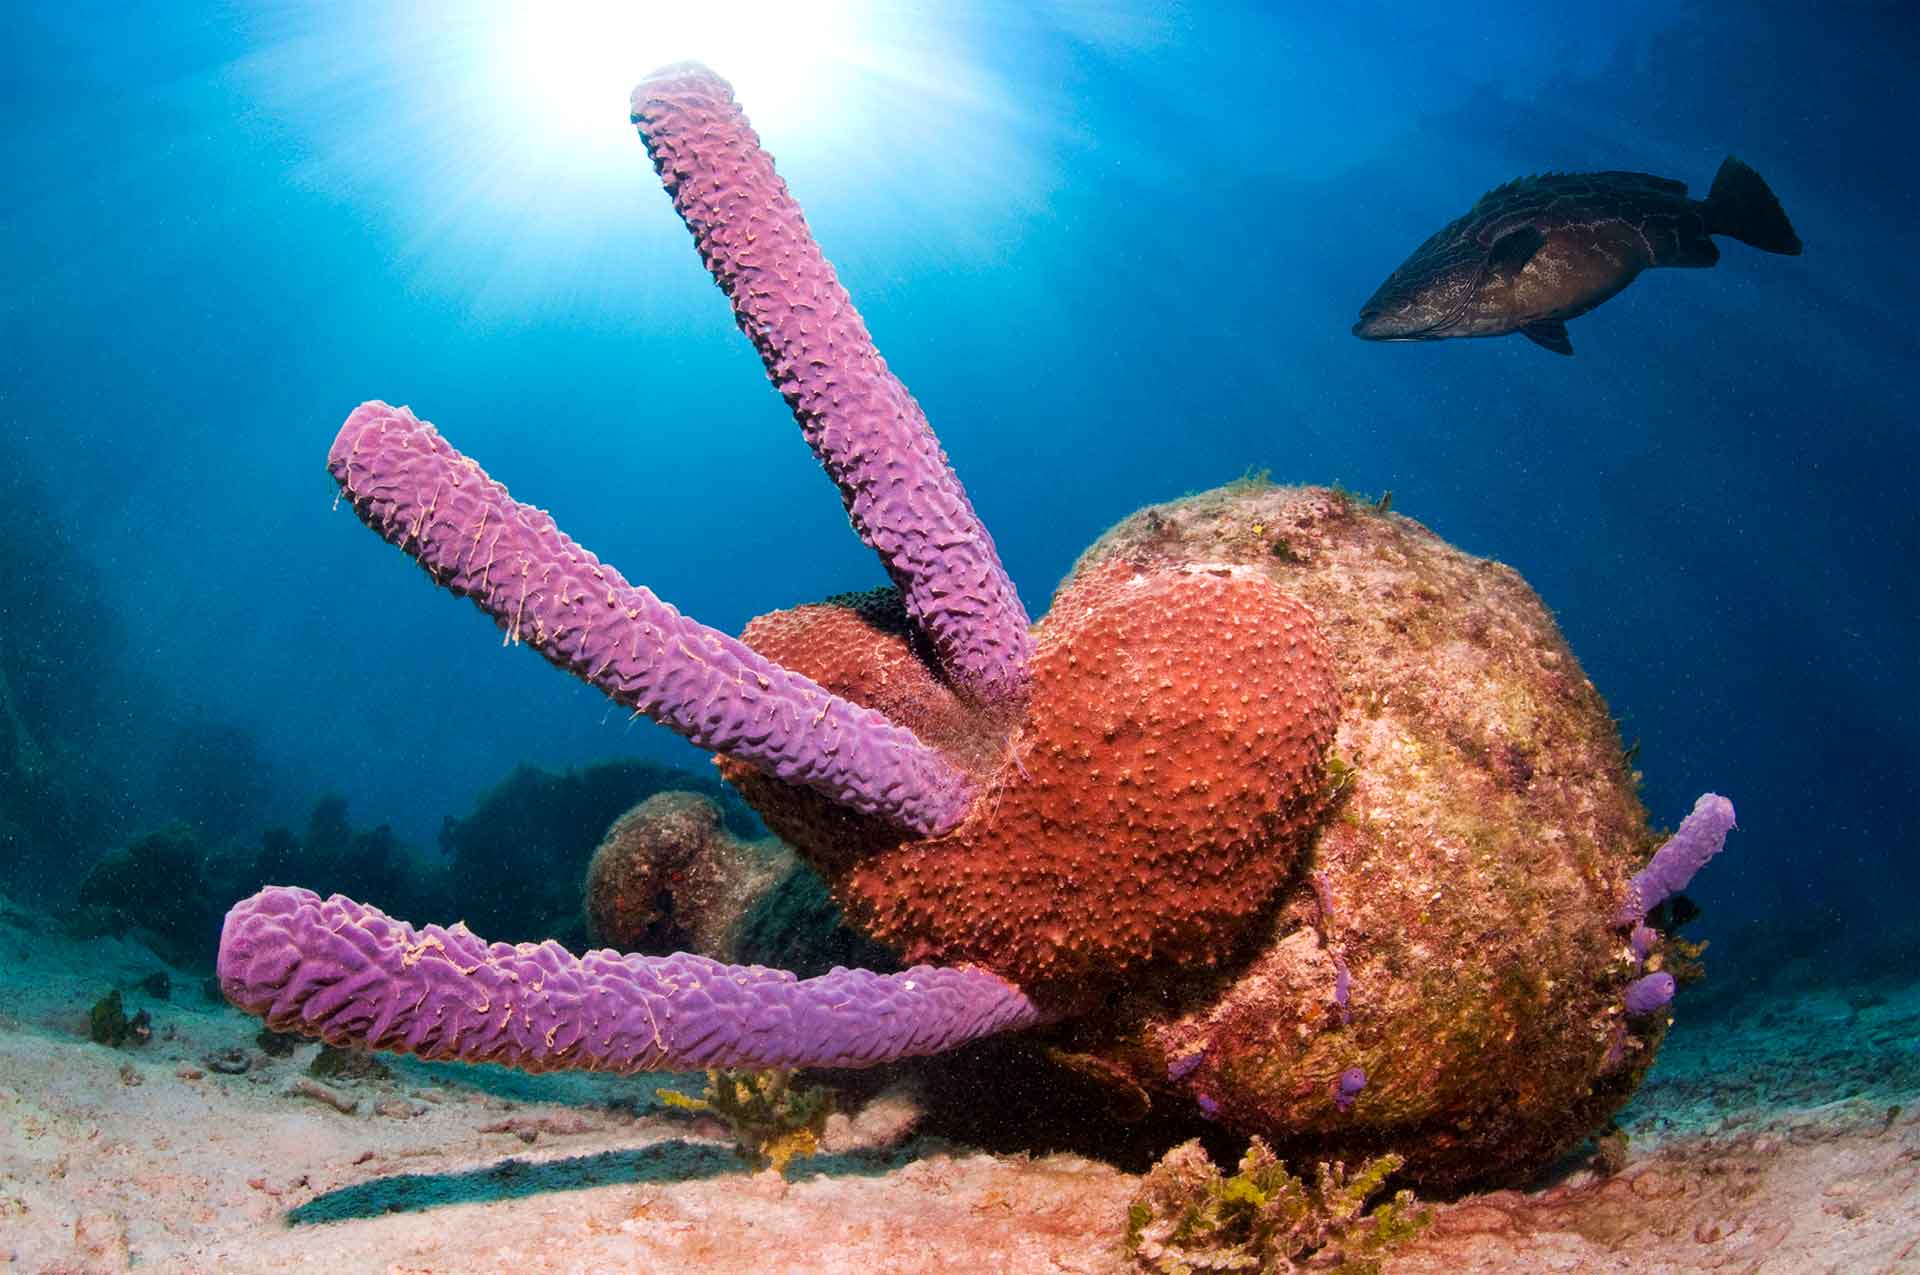 Stove-pipe sponge (Aplysina archeri) with Black grouper (Mycteroperca bonaci) - Cayos Cochinos Banks